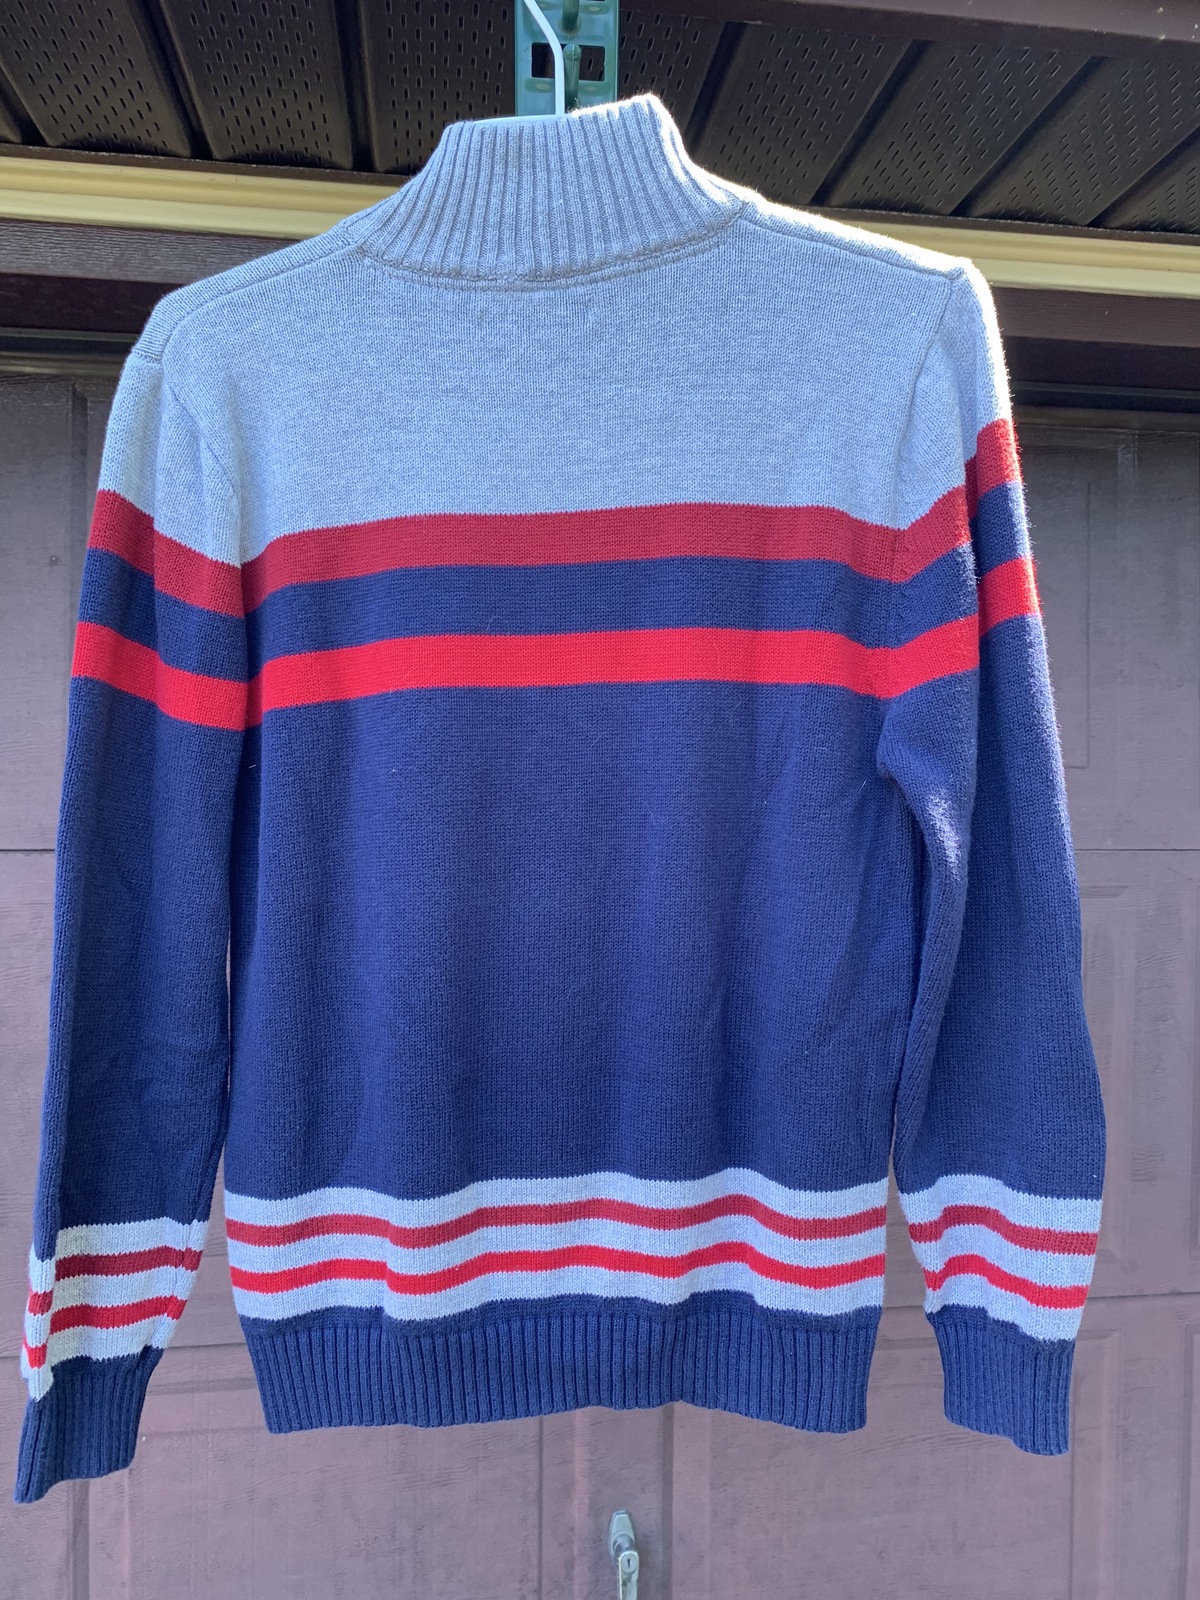 Nautica - Zipper Sweater - Size Boys Large (14/16) - Sweaters